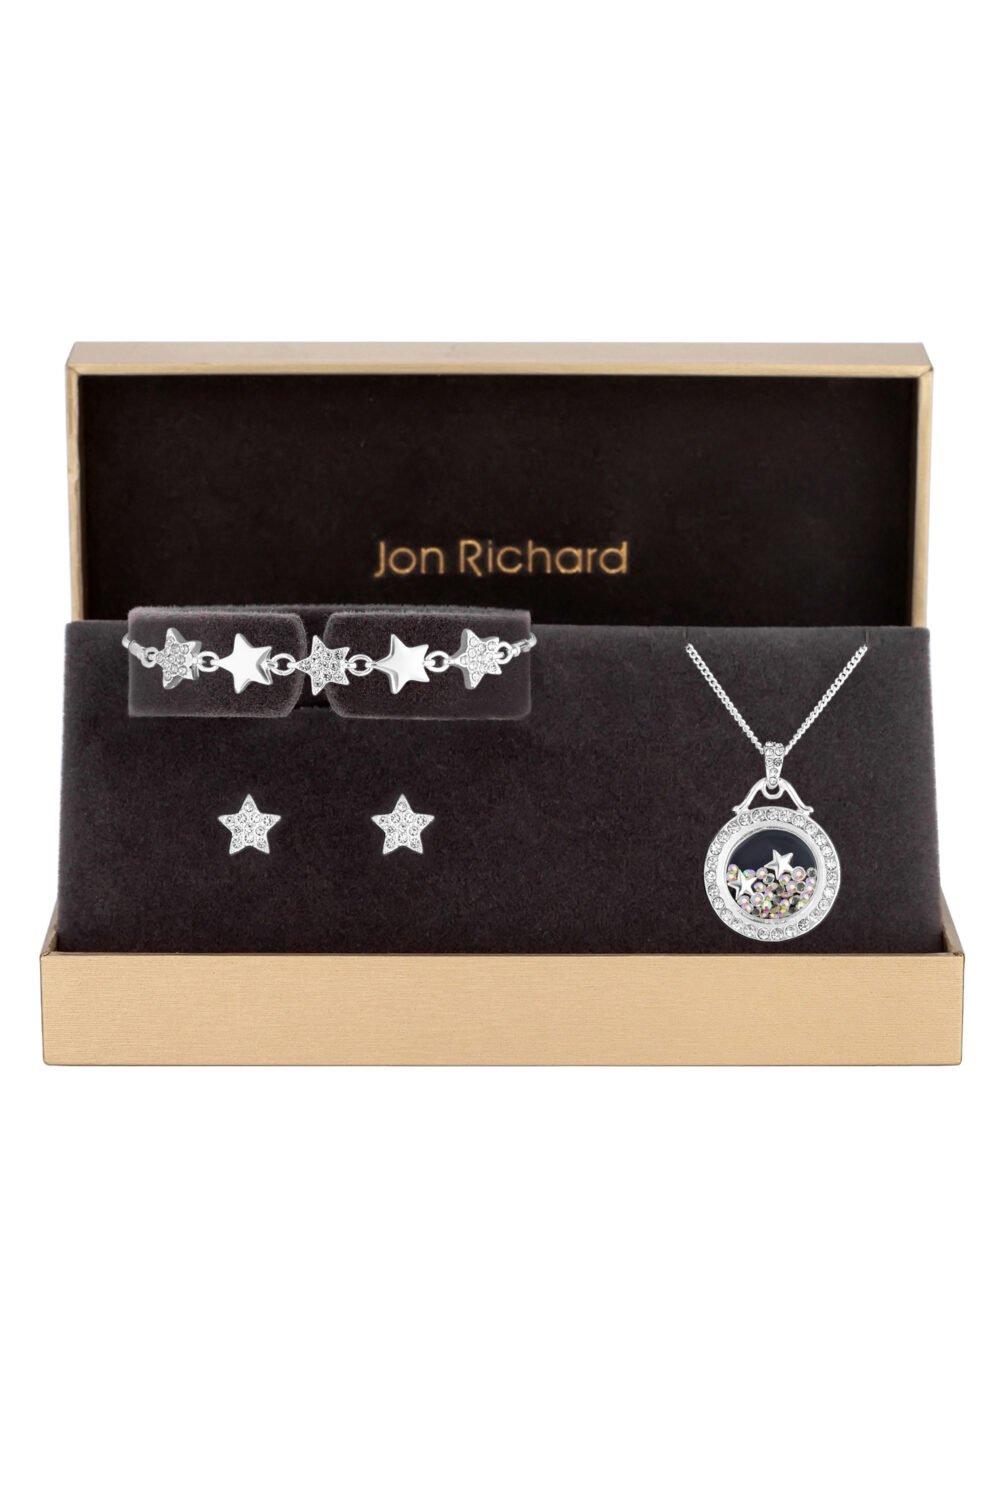 Jon Richard Jon Richard Silver Plated Star Shaker Trio Set - Gift Boxed